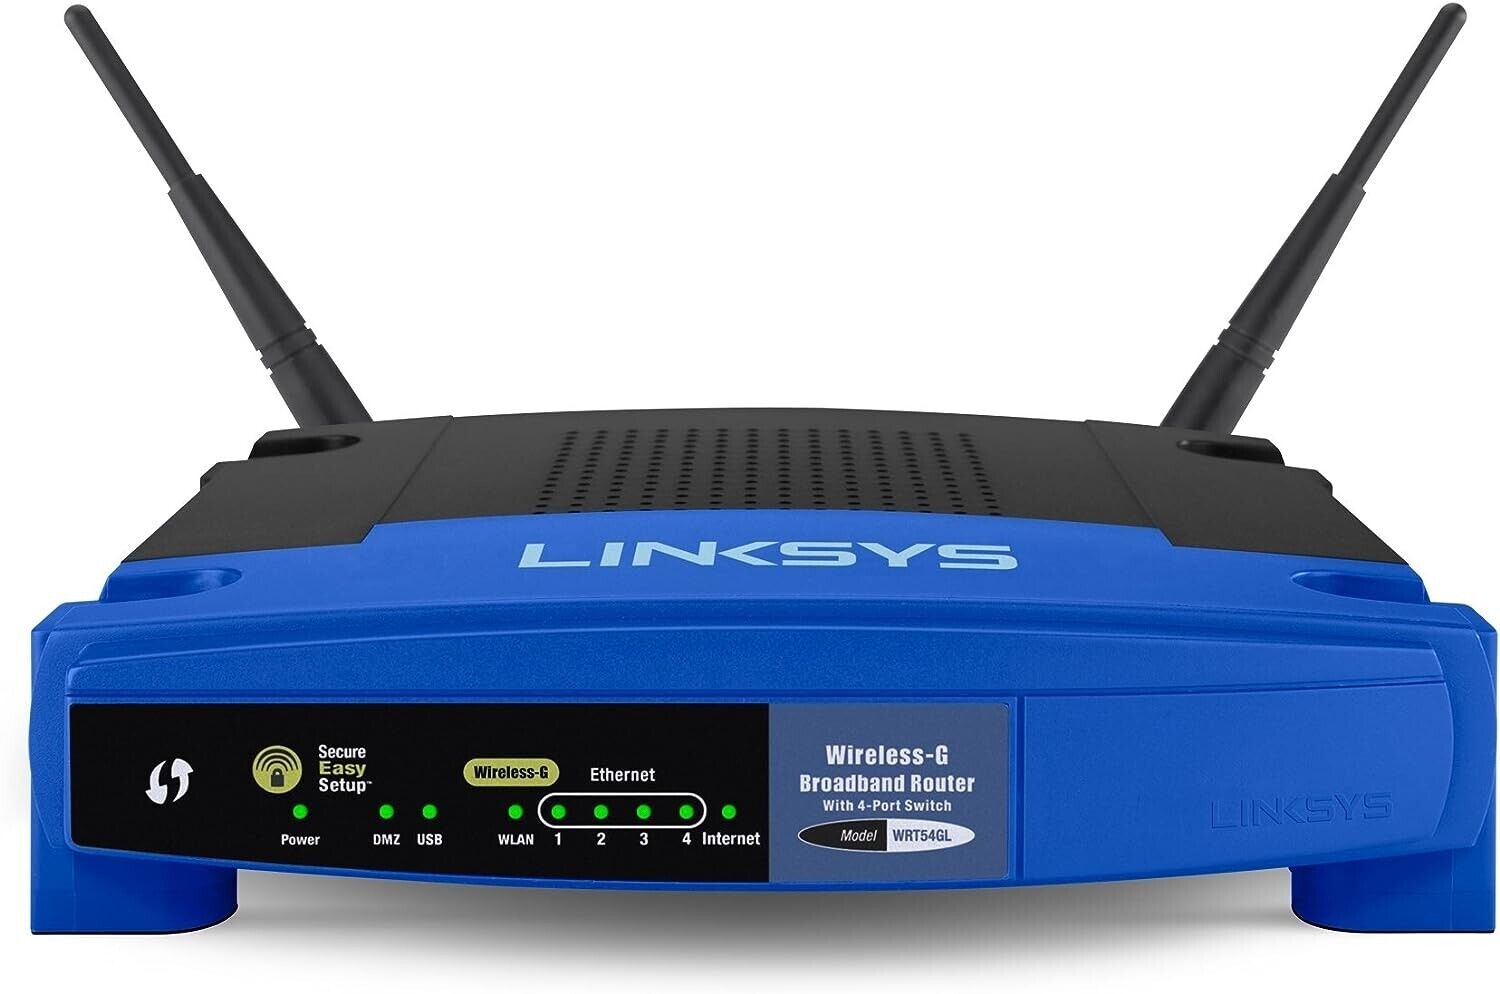 Linksys WRT54GL Wireless-G Broadband Router, WiFi